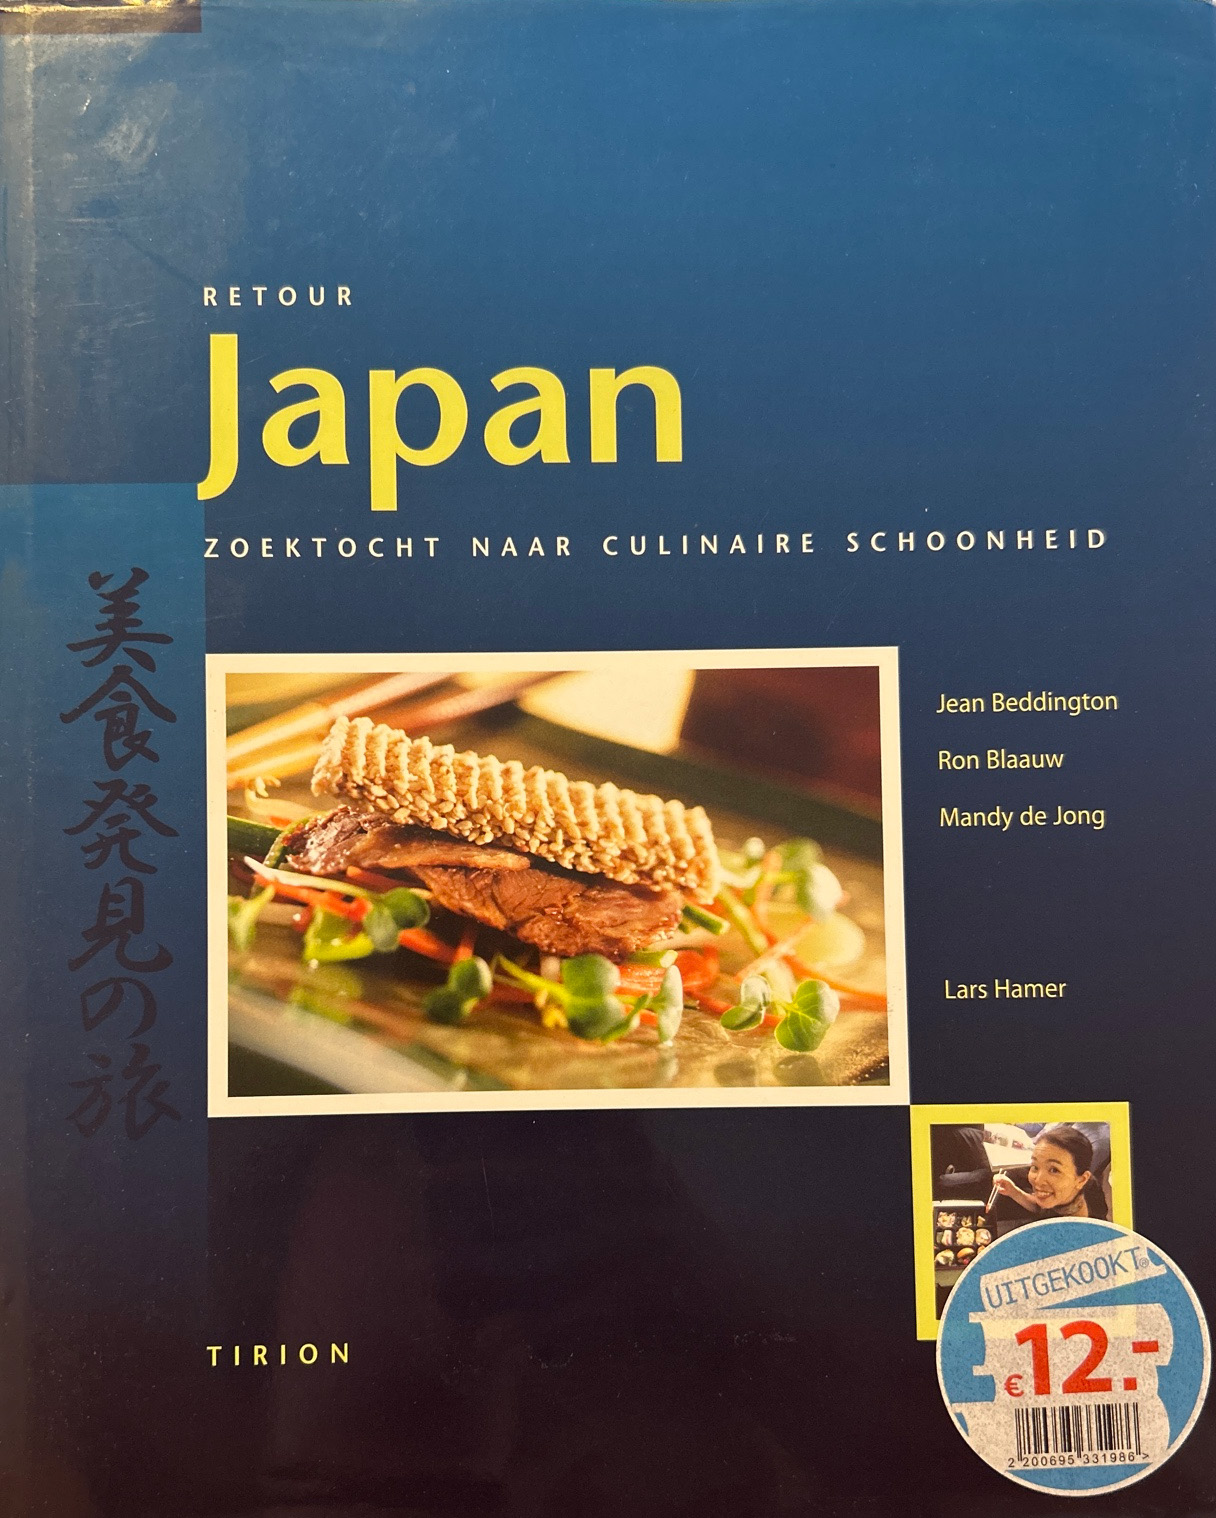 Retour Japan – Jean Beddington, Ron Blaauw, Mandy de Jong